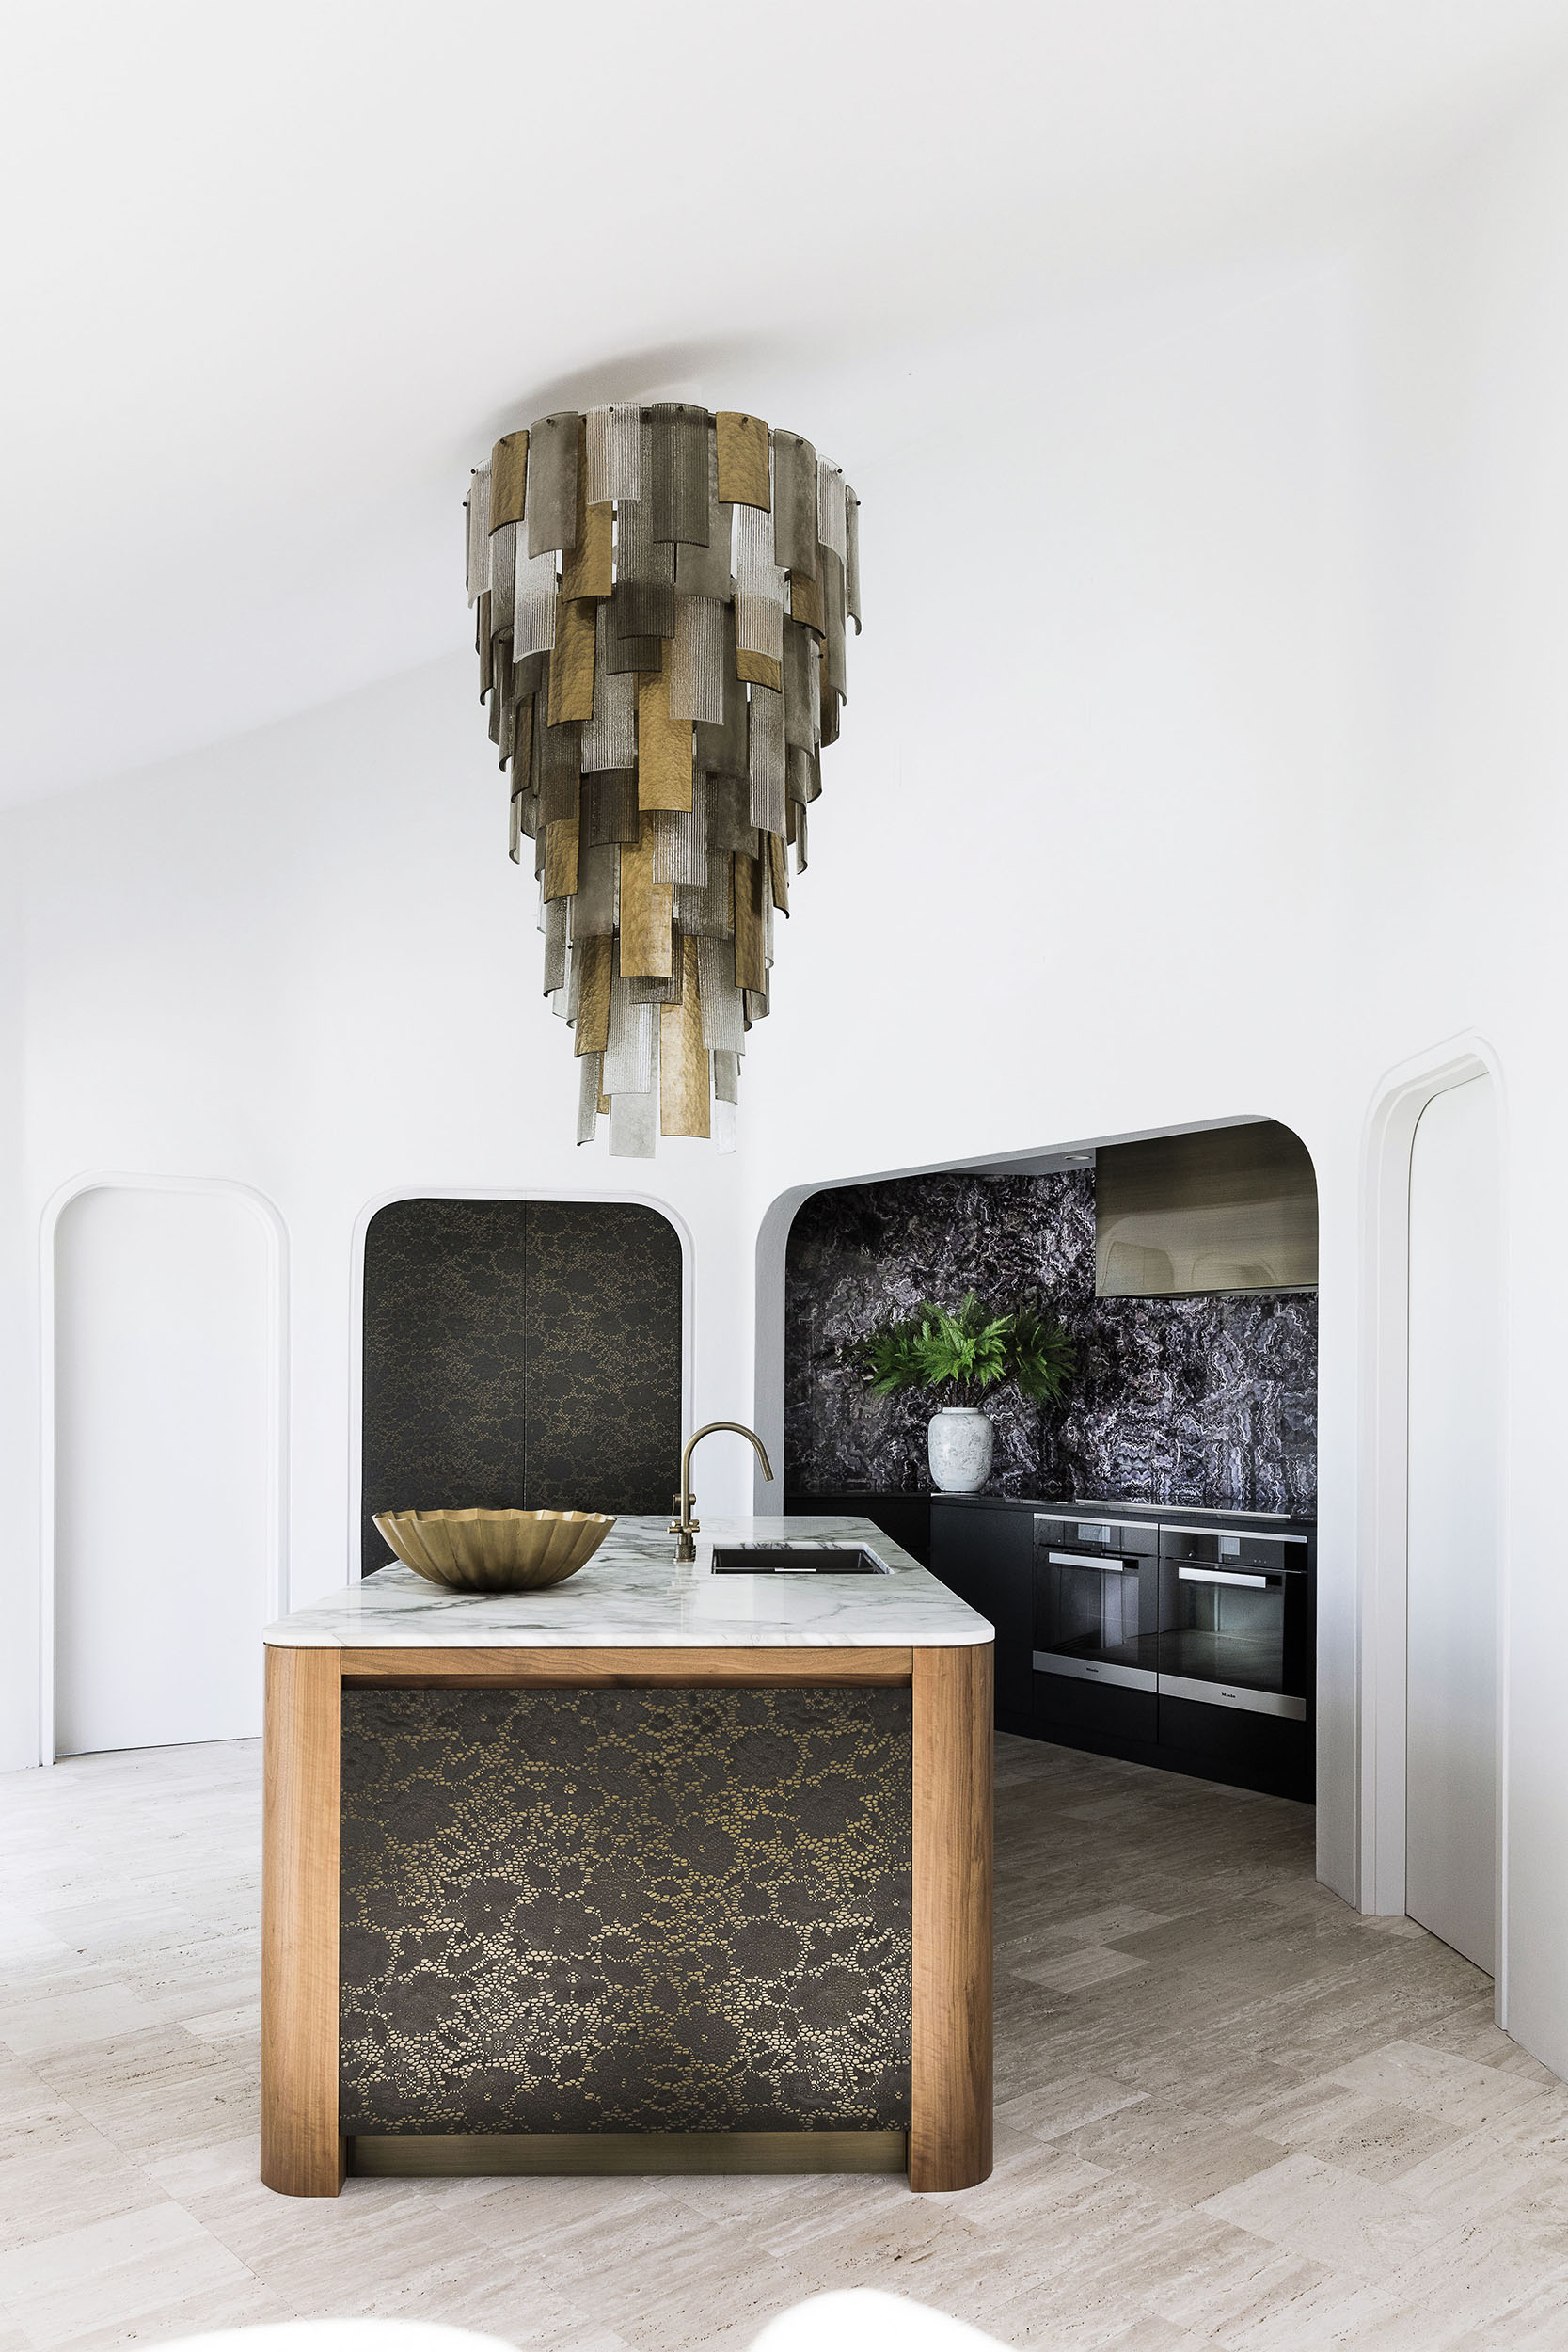 Kitchen renovation with amethyst kitchen splashback and Axolotl cupboards by Sydney interior designers, Brendan Wong Design